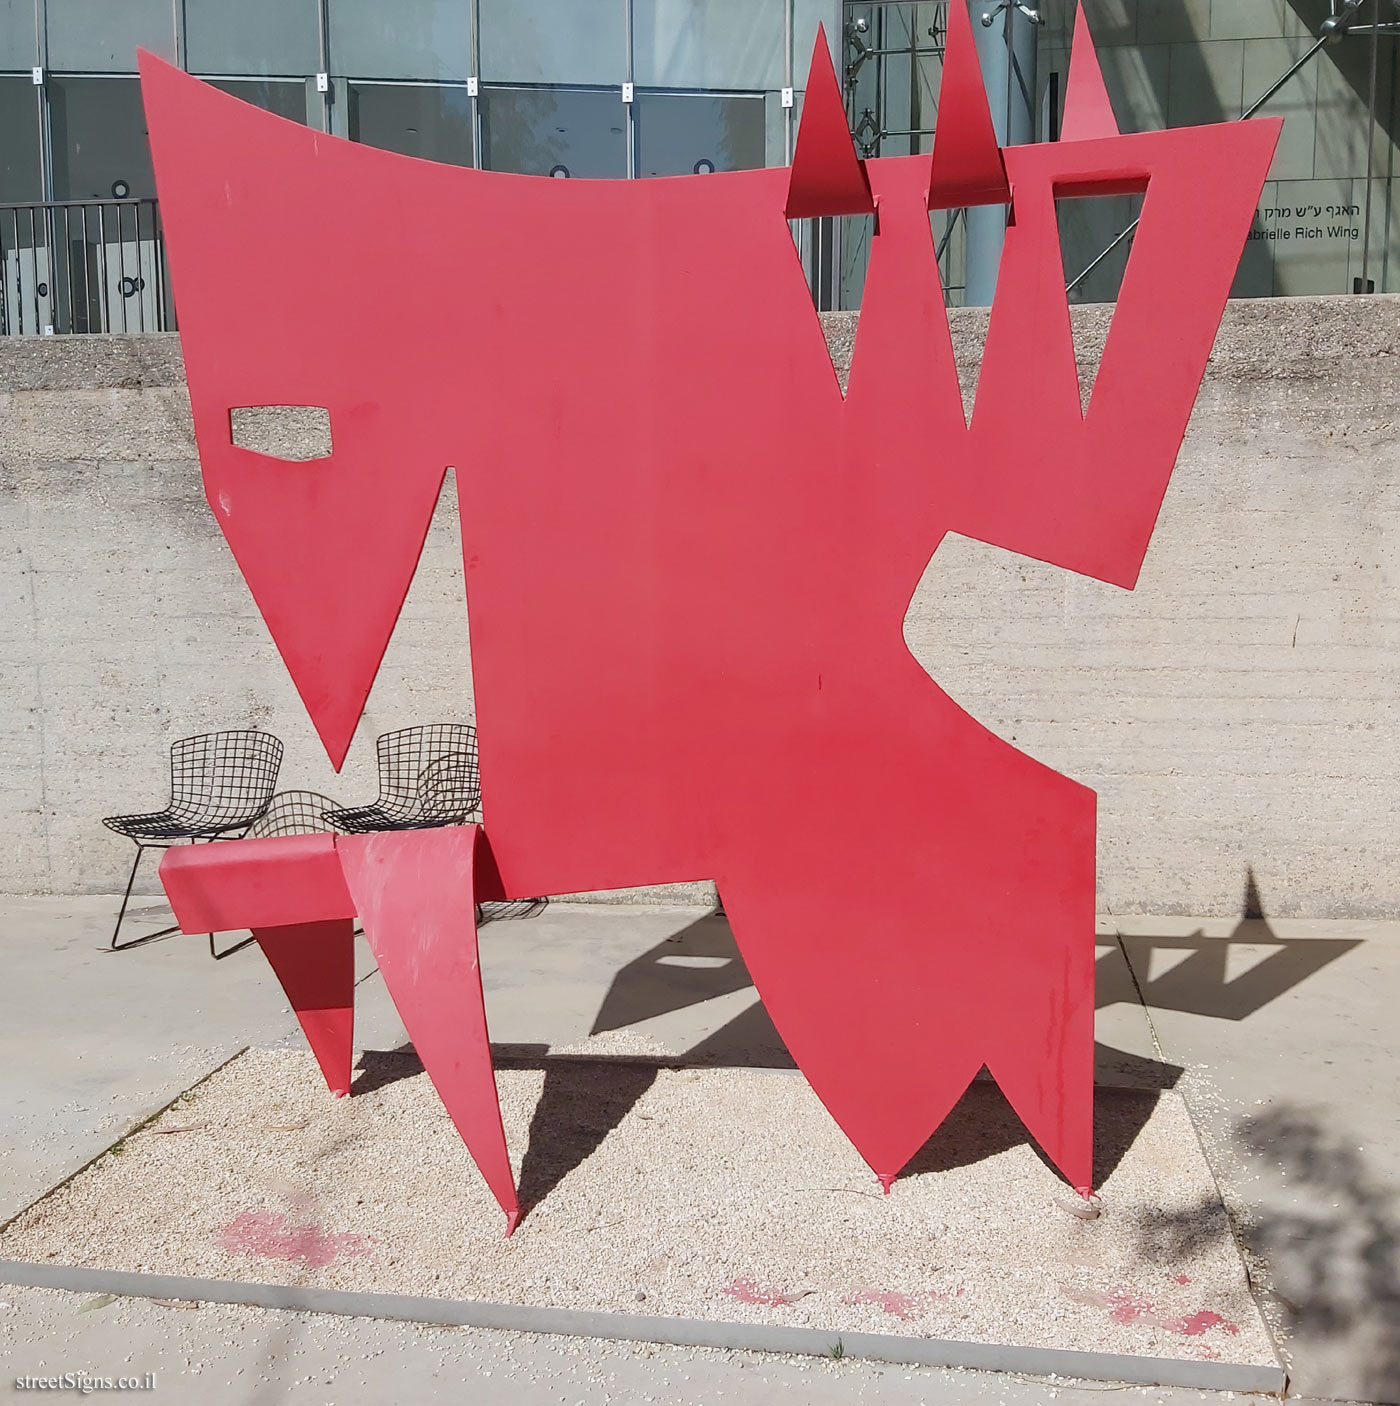 Tel Aviv - Lola Beer Ebner Sculpture Garden - "Animal" - Dov Feigin - Tel Aviv Museum